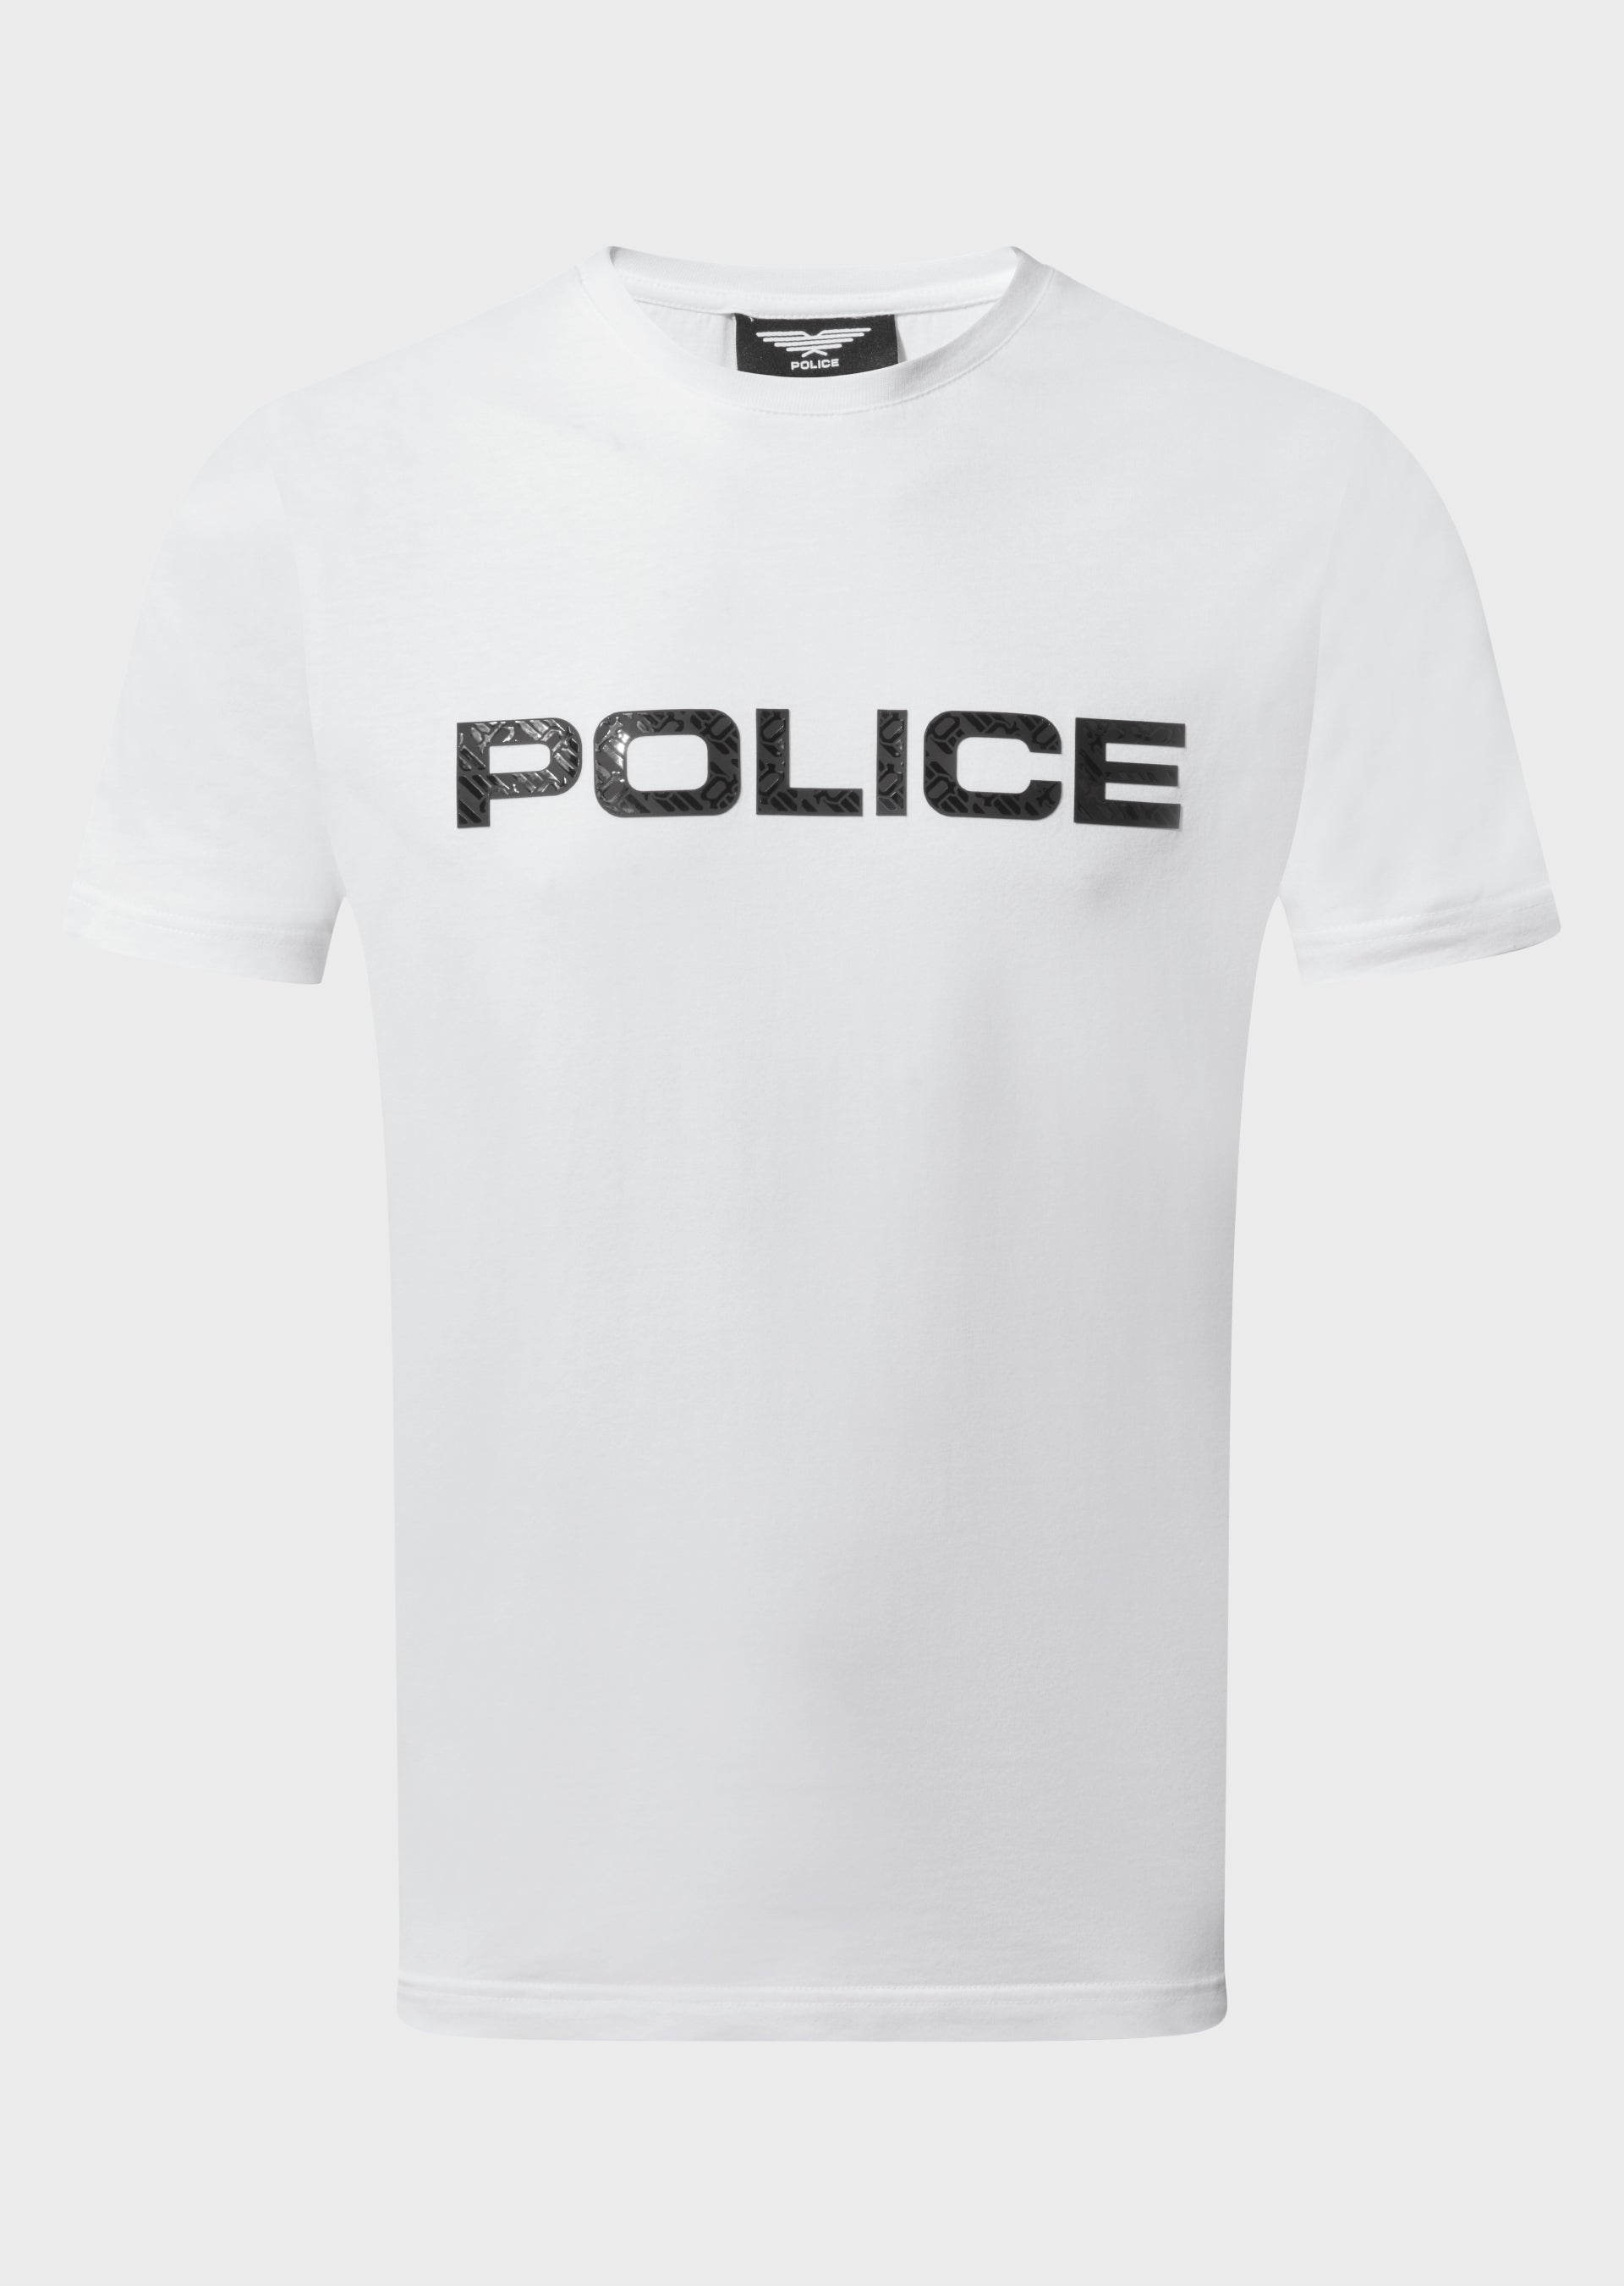 883 POLICE SILVIO T-SHIRT - WHITE